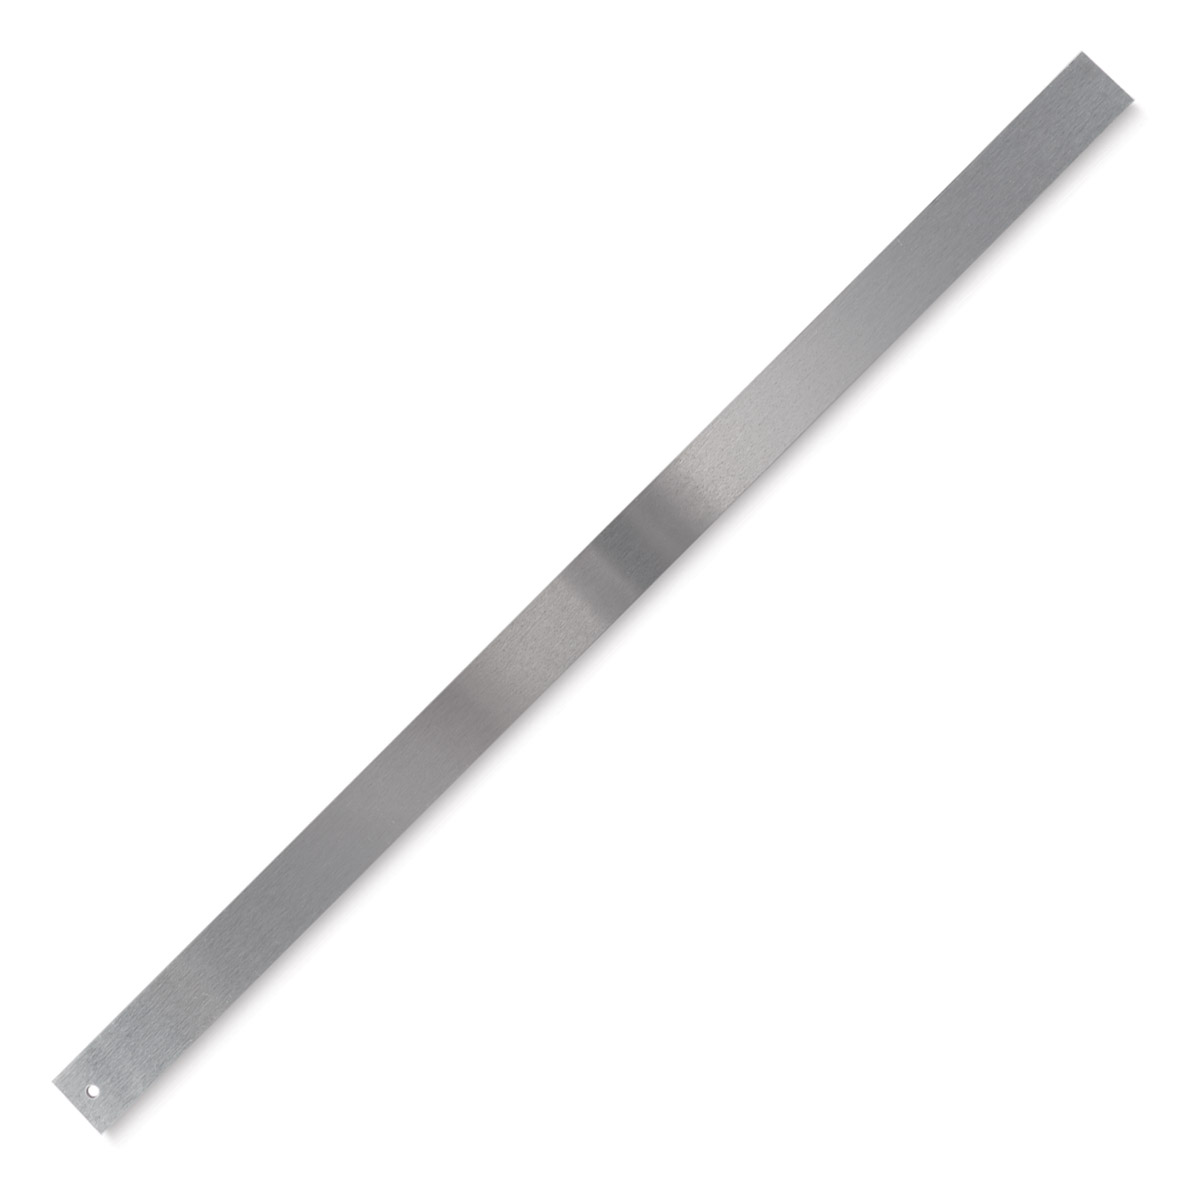 FAIRGATE Aluminum Yard Stick Ruler - 36